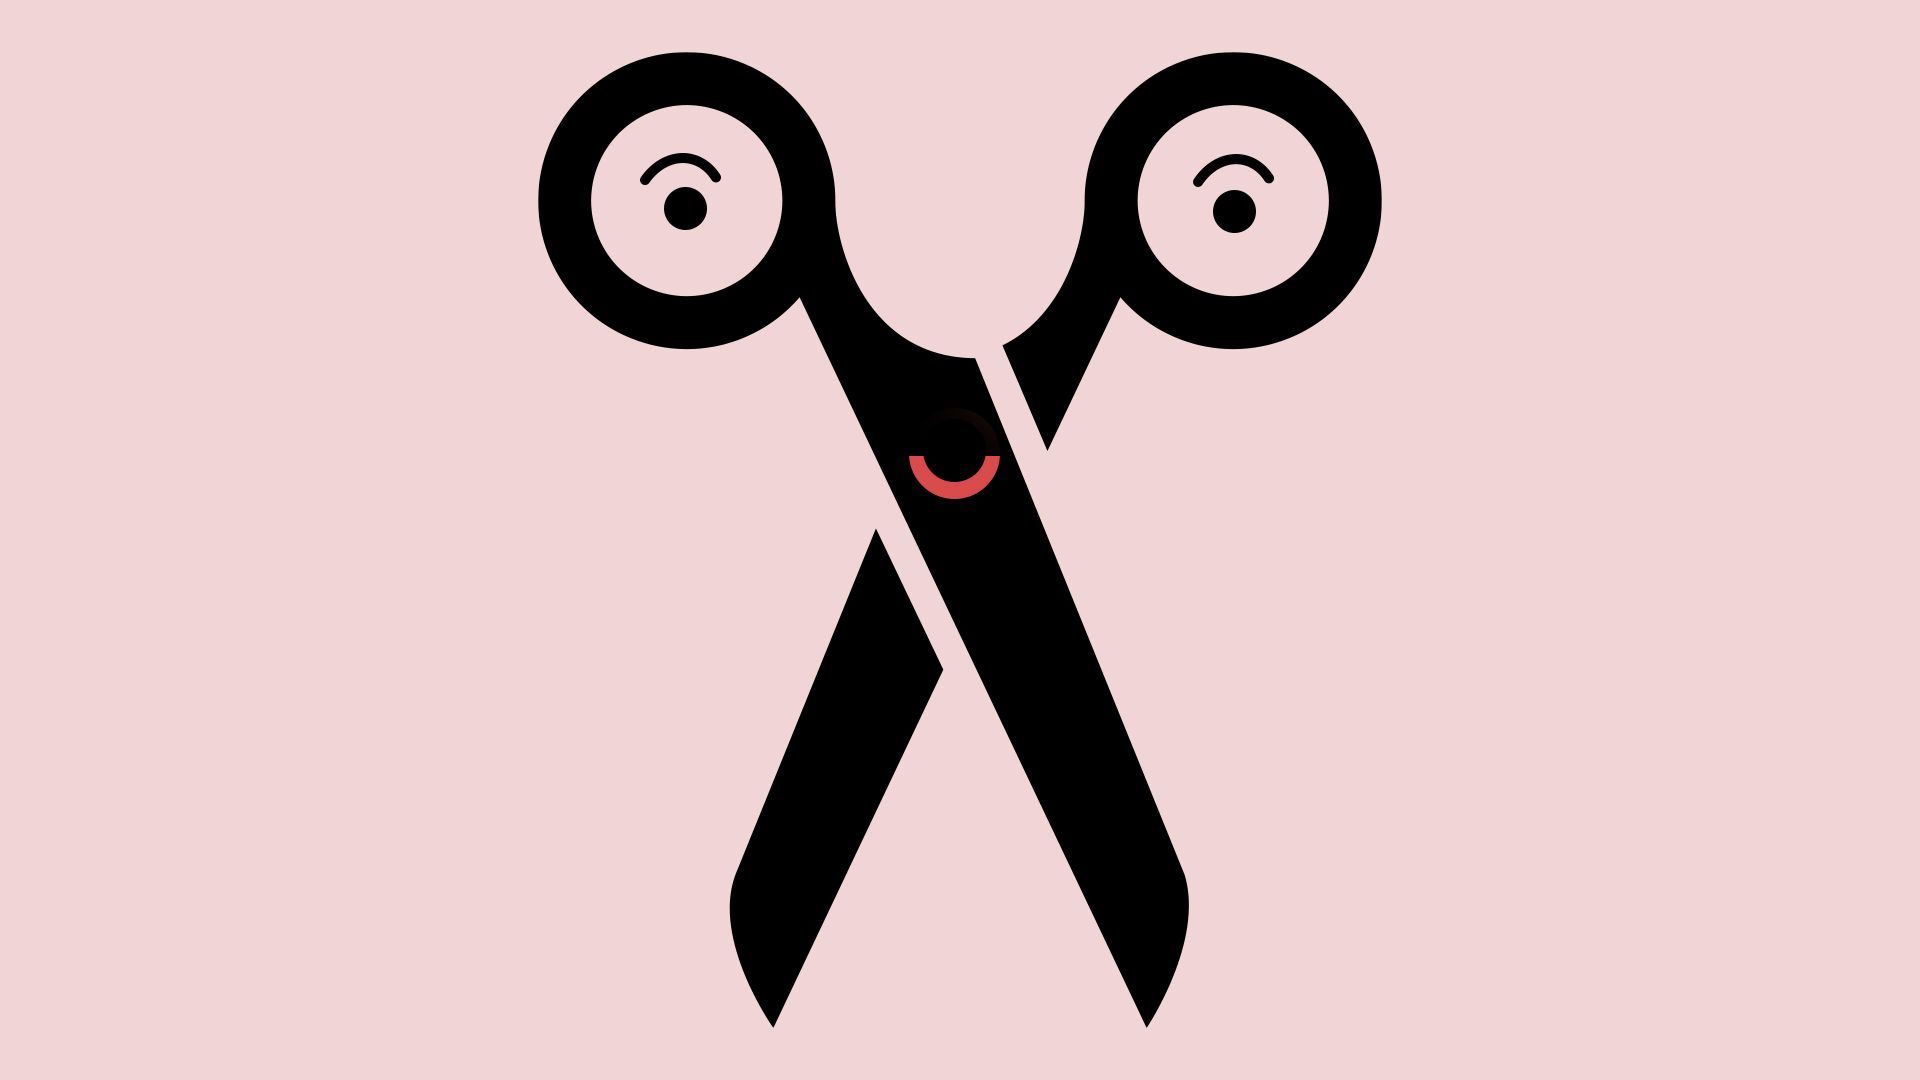 Illustration of a smiling scissors.